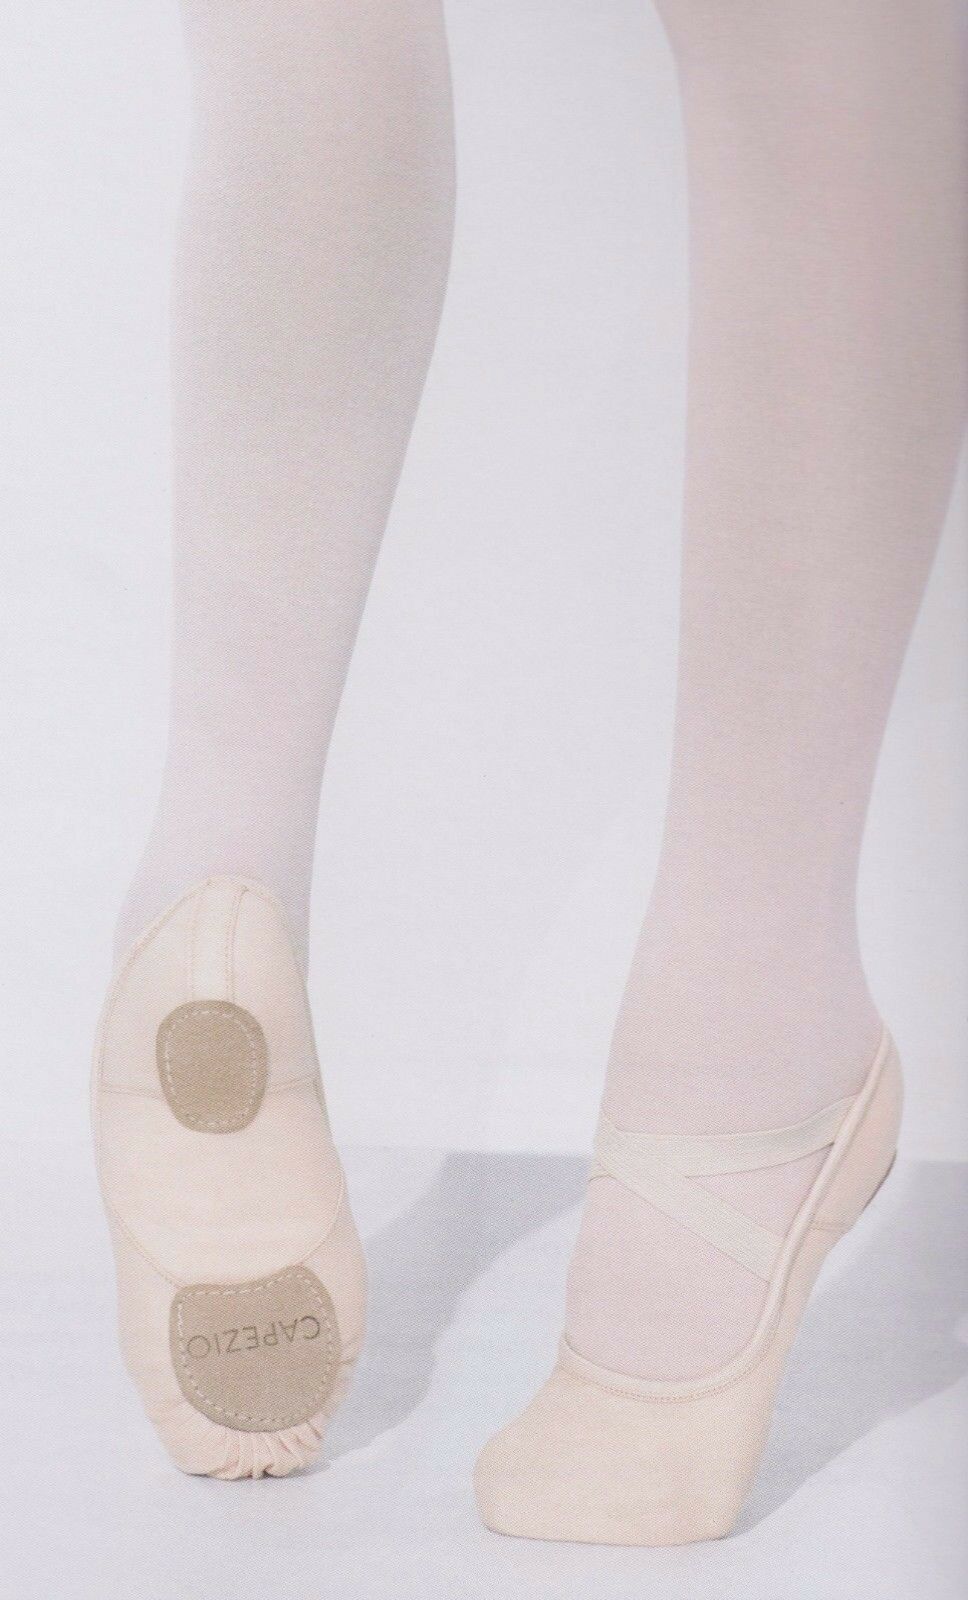 Capezio 2037w Pink Stretch Canvas Soft Ballet Shoes Hanami Run Small